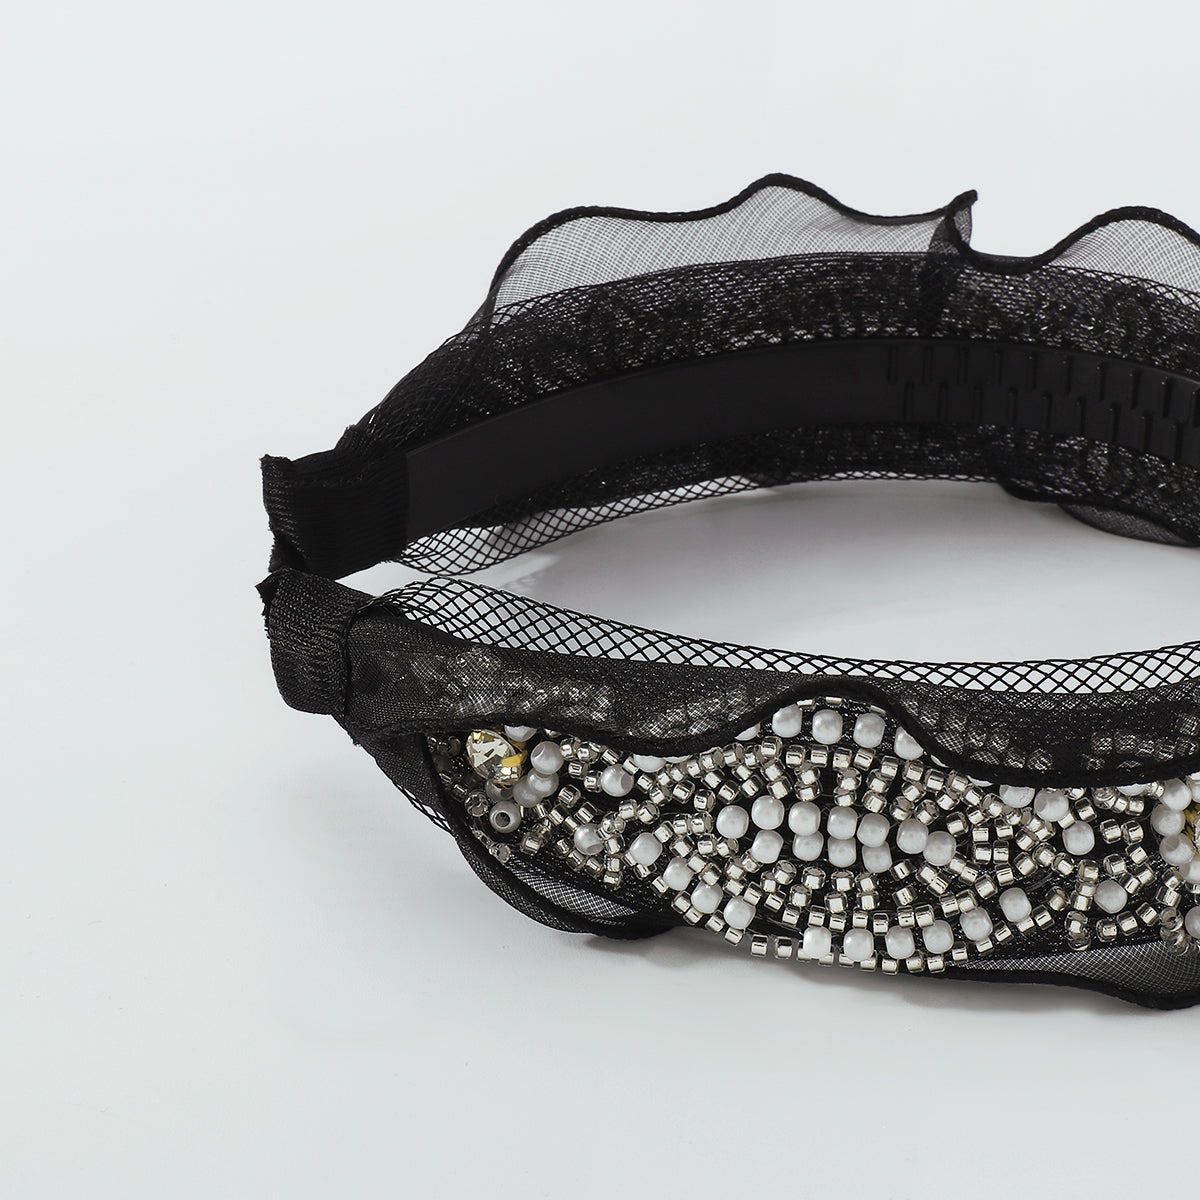 Vintage Black Lace Beads Knotted Headband medyjewelry